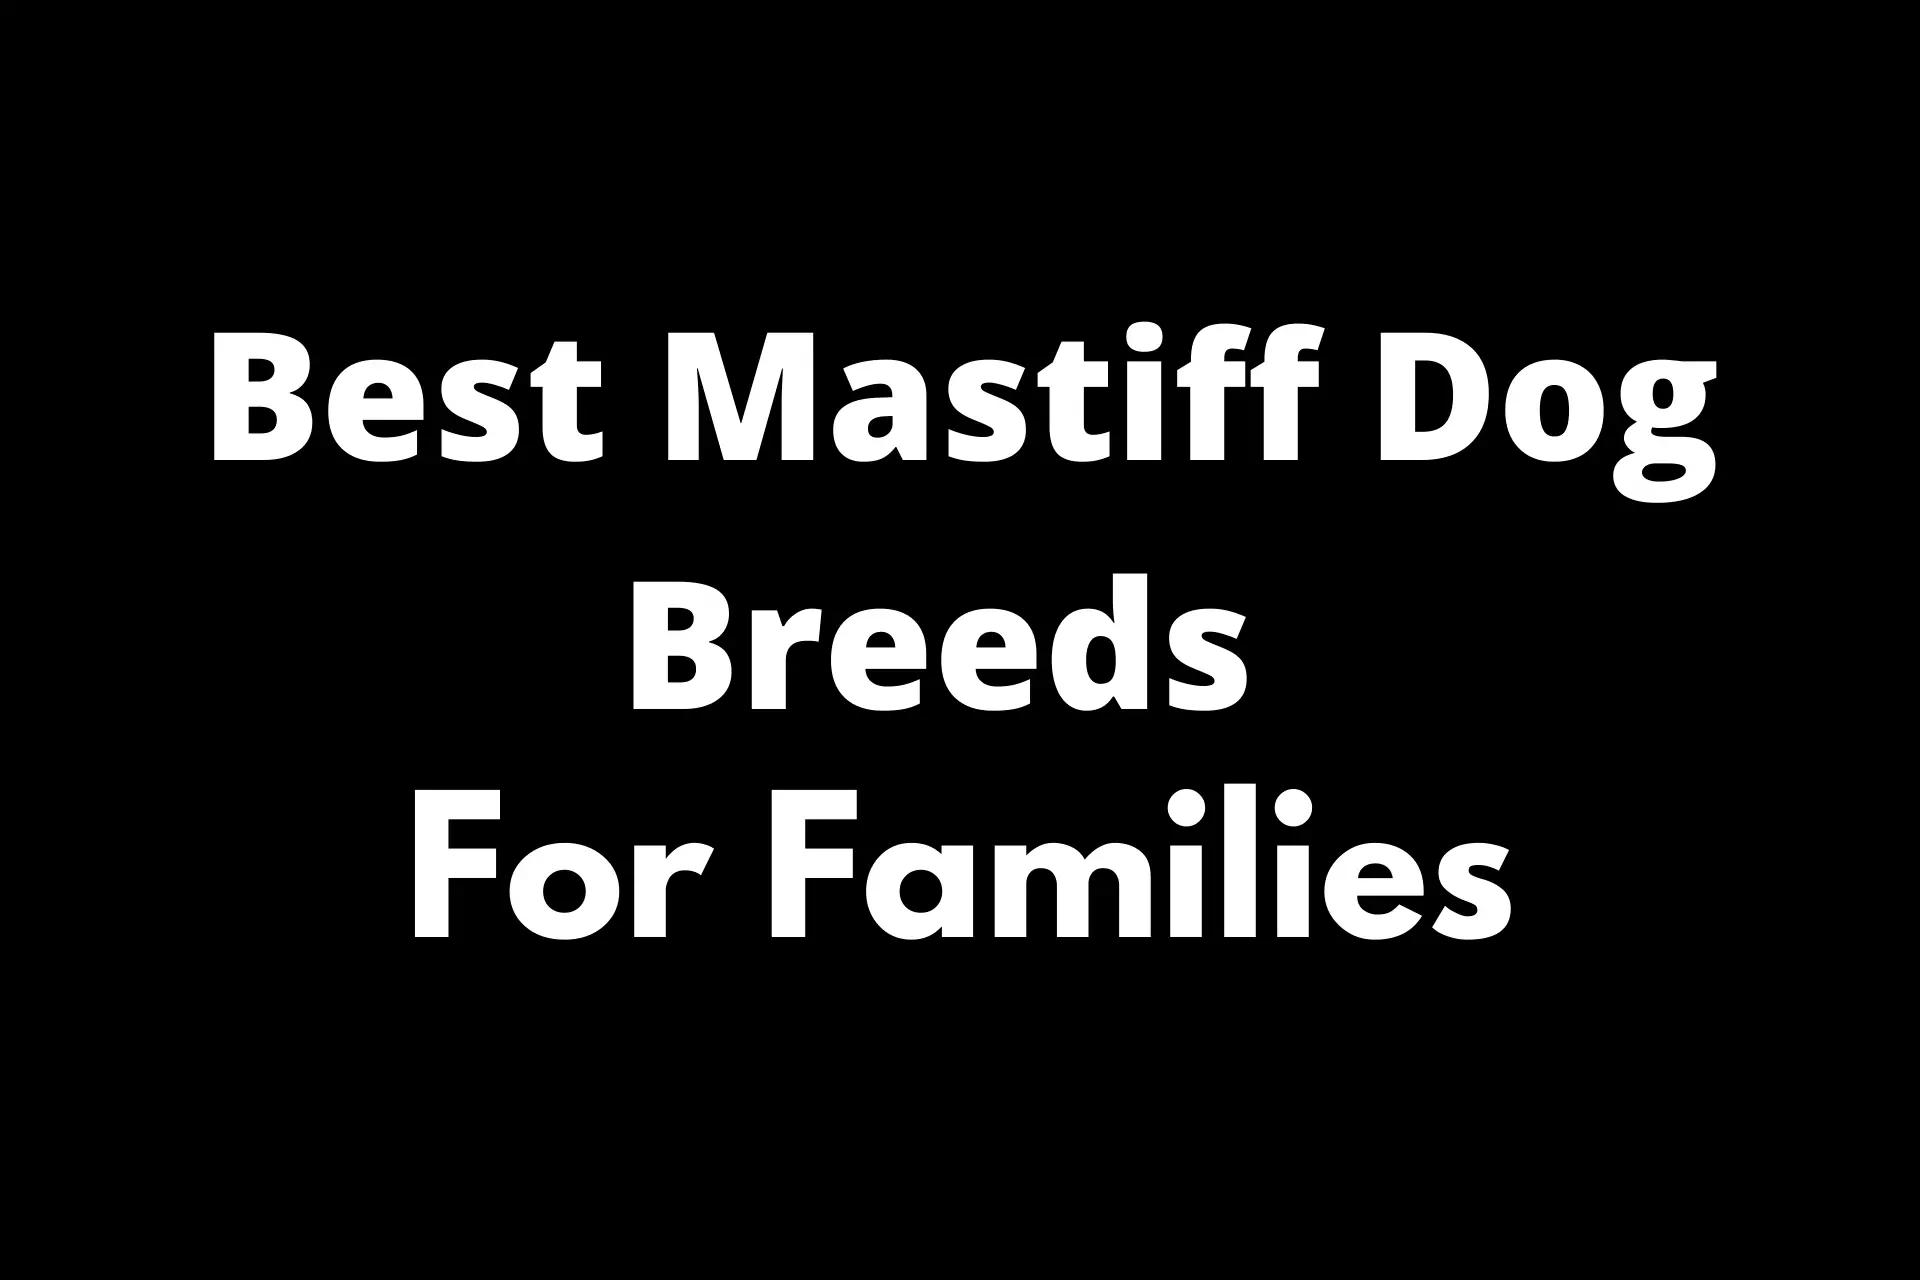 Mastiff Dog Breeds For Families